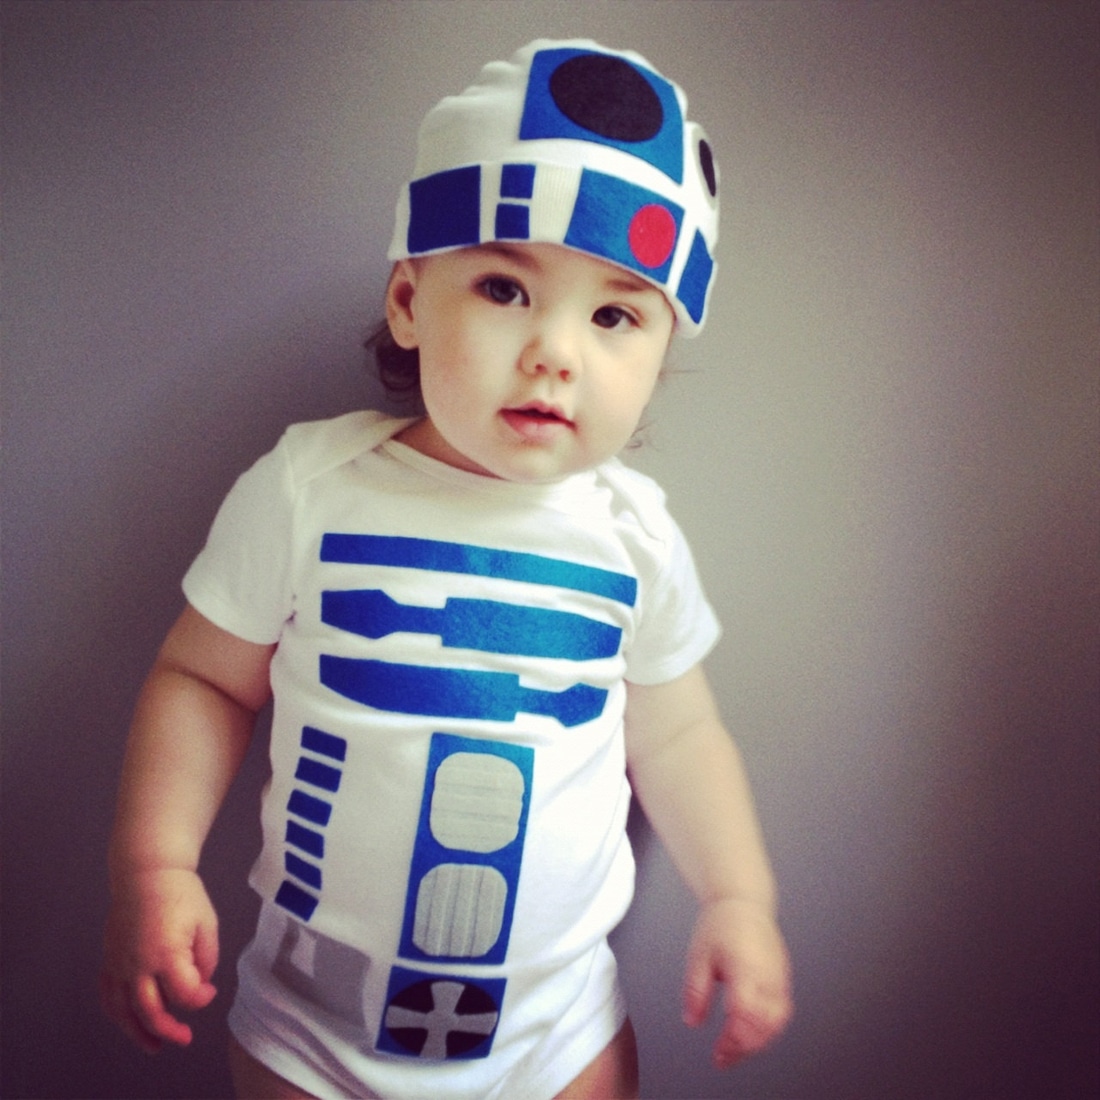 Baby-R2-D2-Costume